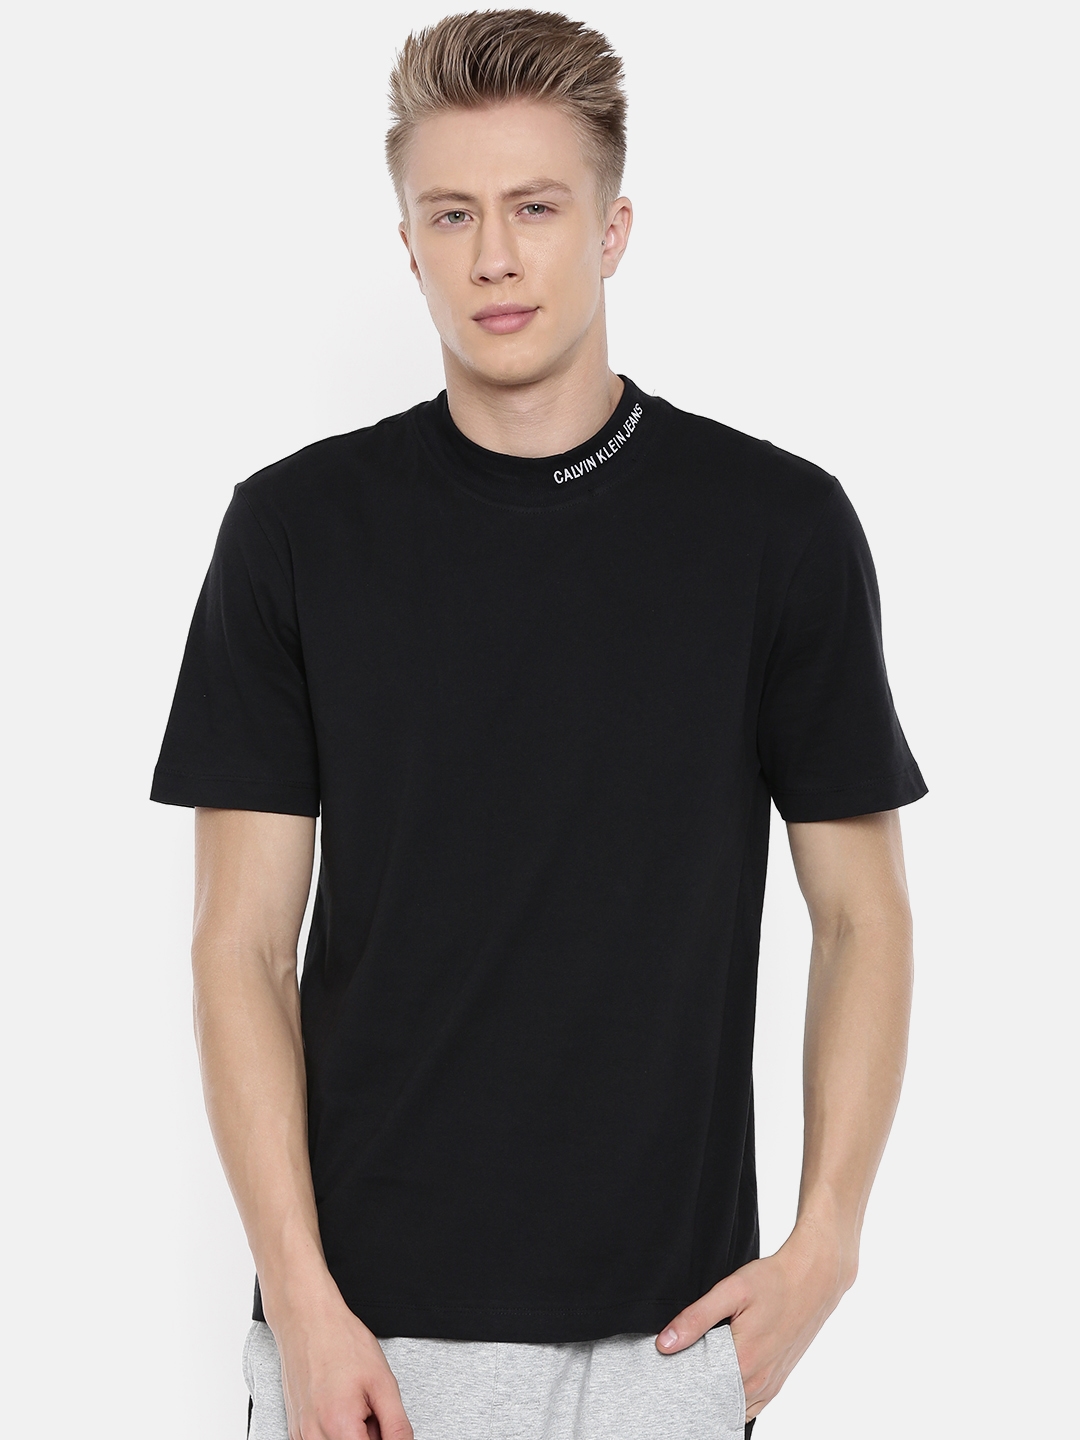 | Men Myntra Klein Neck 8517047 Black Tshirts Shirt - Cotton T Calvin for Buy High Pure Jeans Men Solid